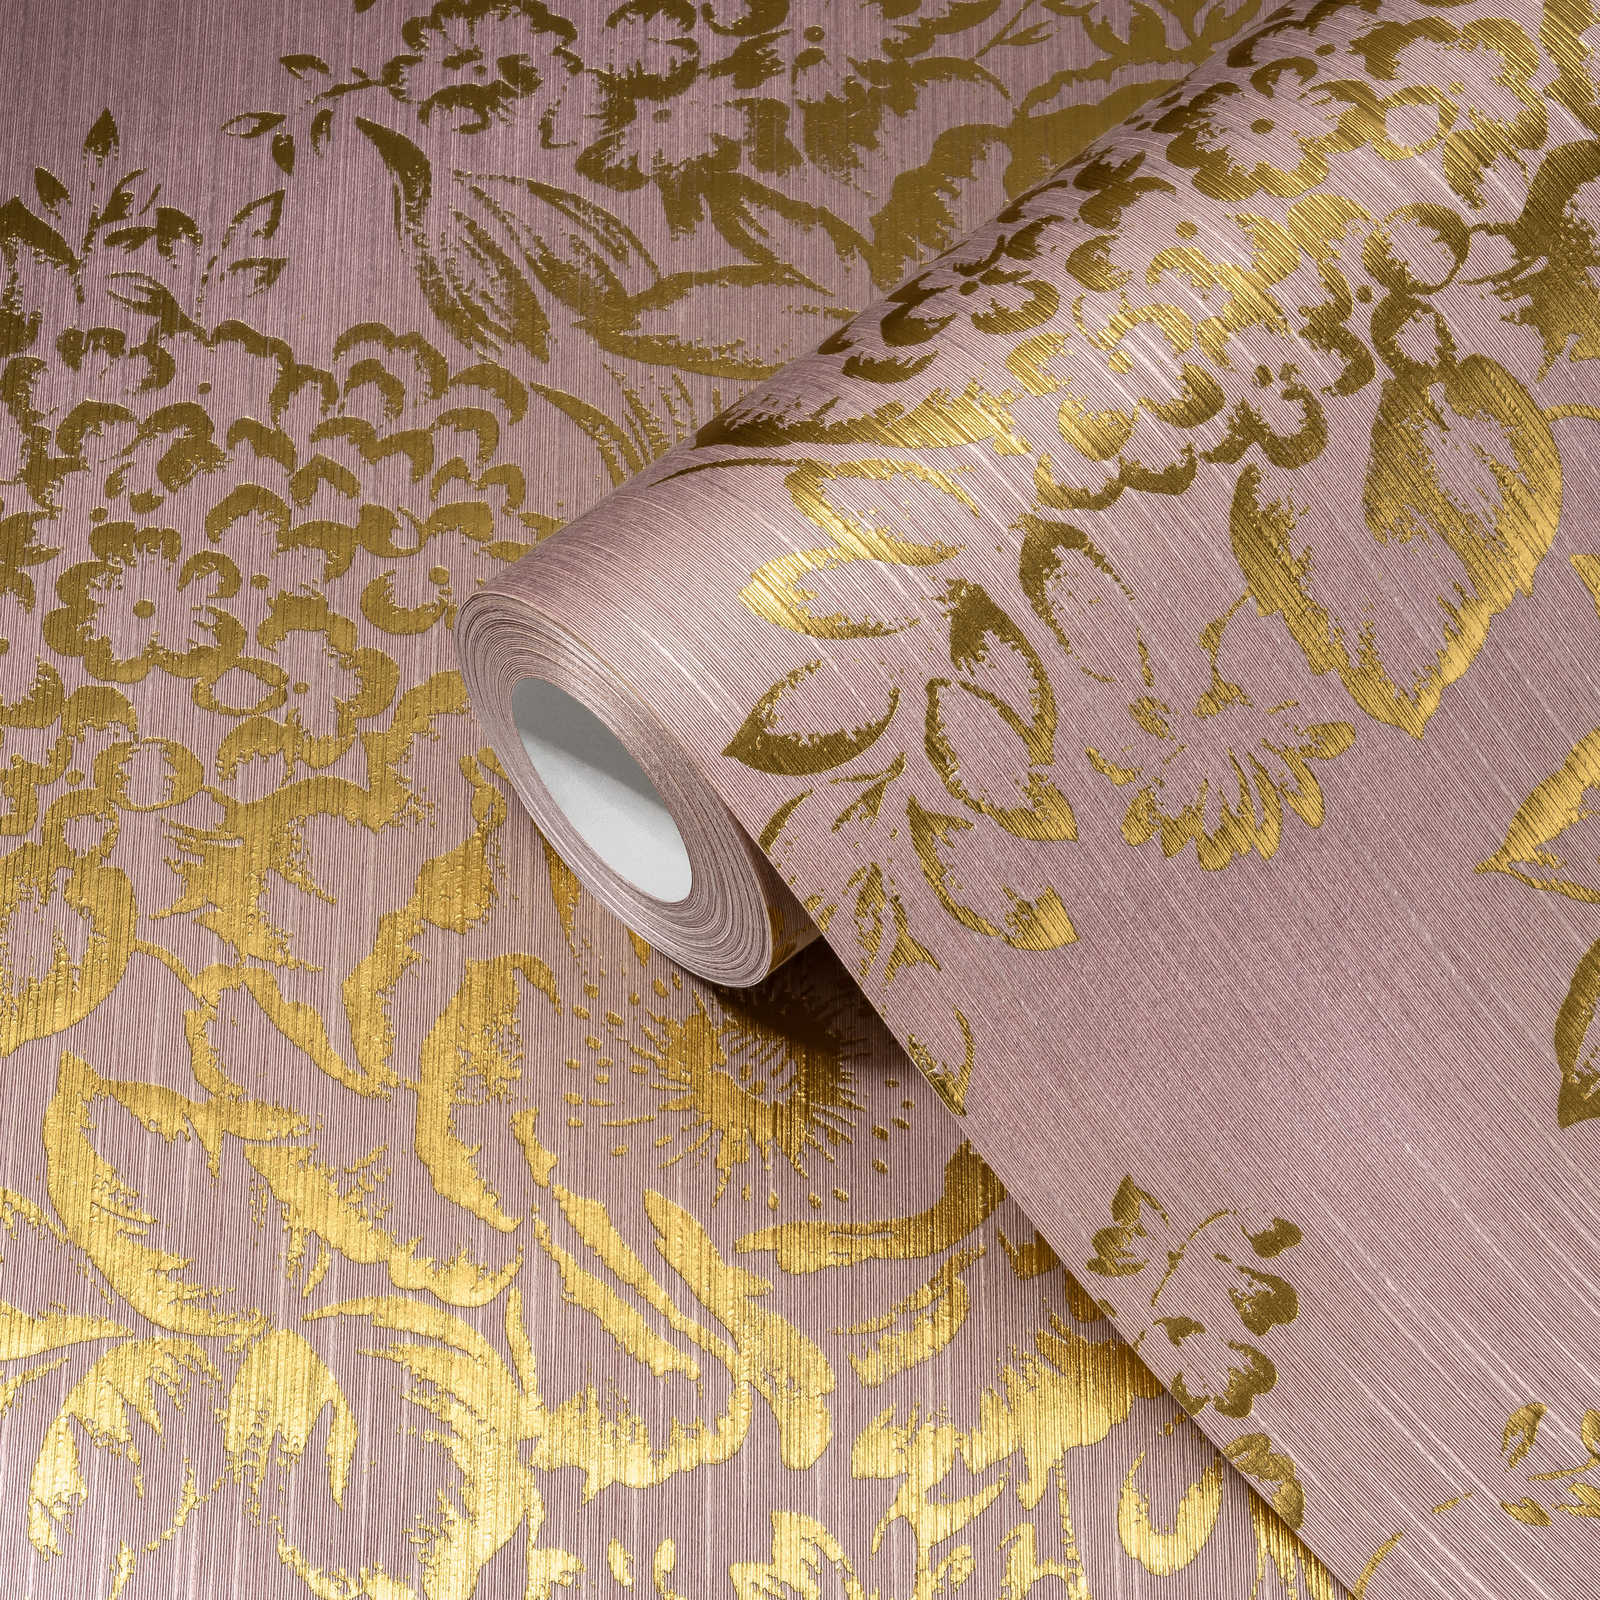             Strukturtapete mit goldenem Blütenmuster – Gold, Rosa
        